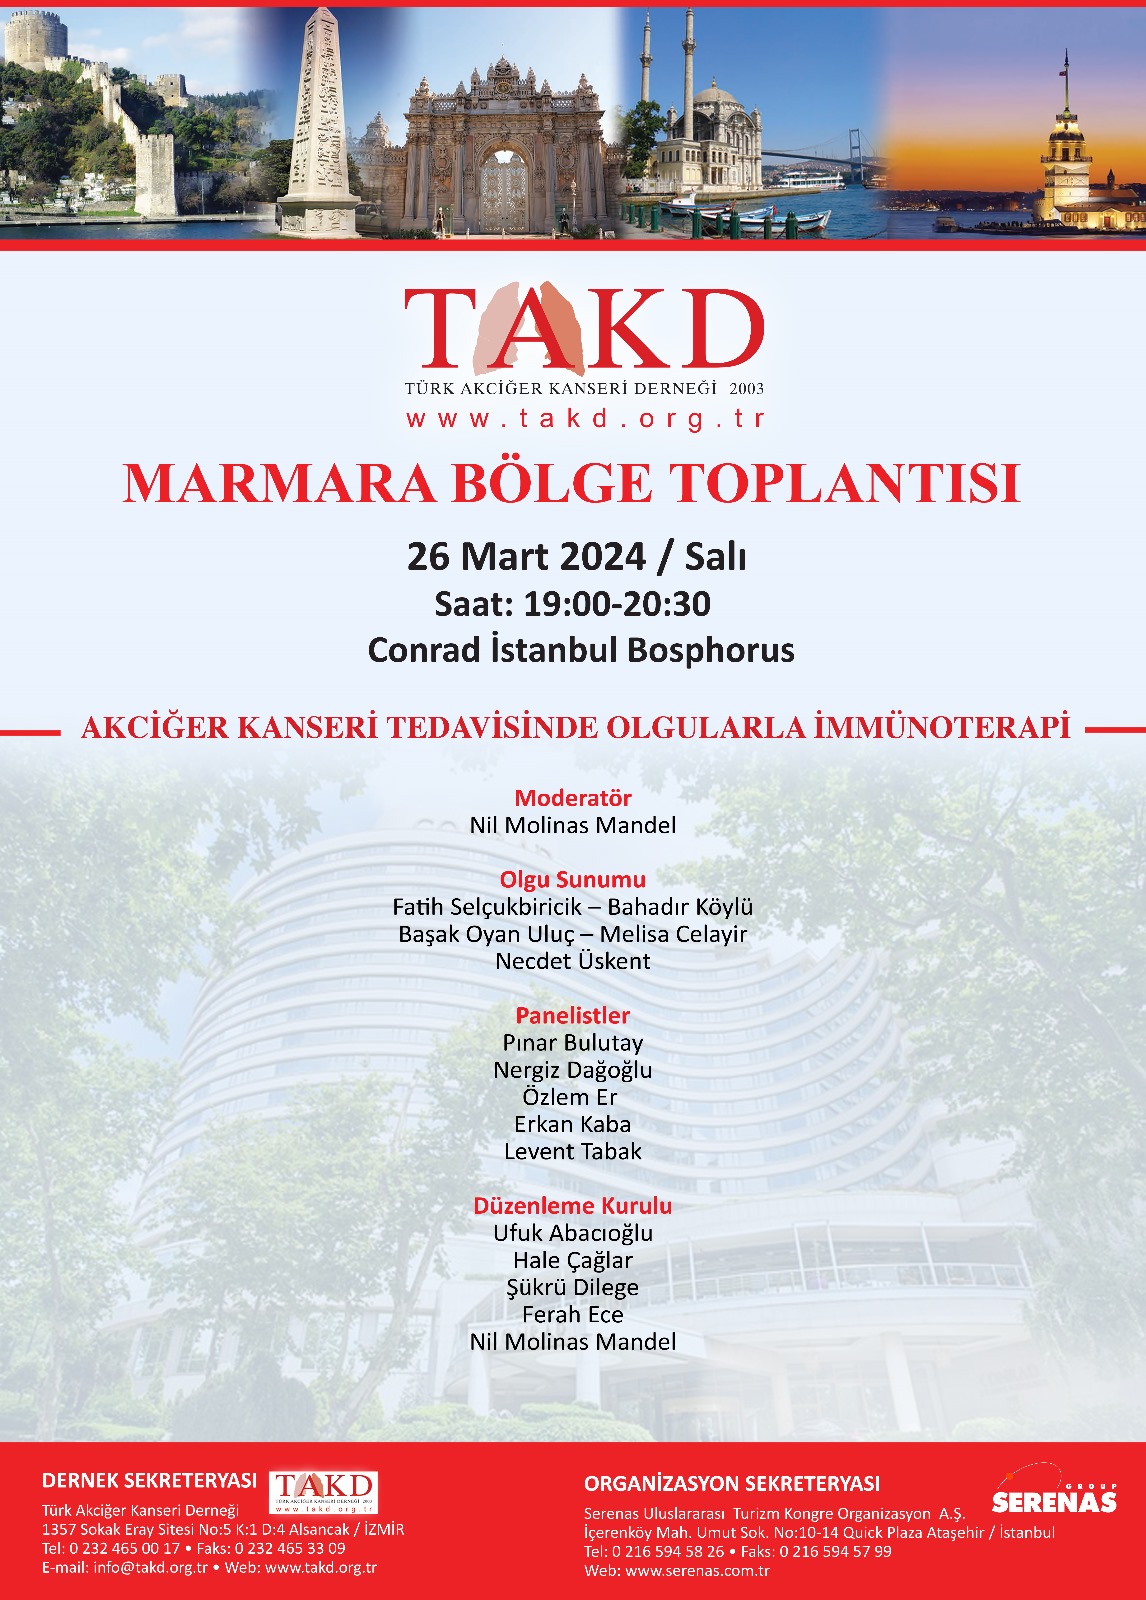 26 Mart 2024,Marmara Bölge Toplantısı,İstanbul